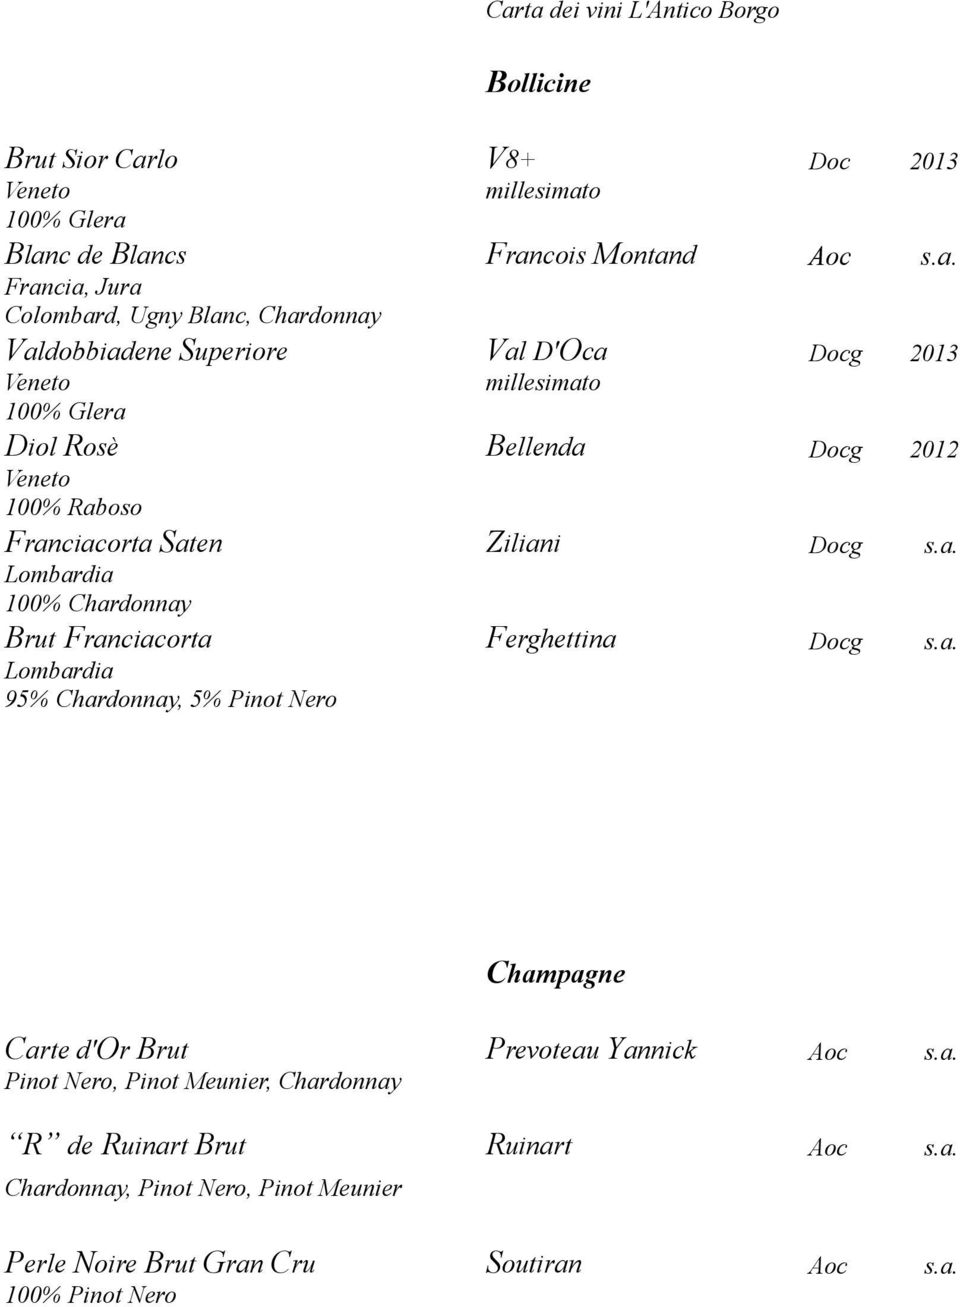 Chardonnay Brut Franciacorta Ferghettina Lombardia 95% Chardonnay, 5% Pinot Nero Aoc s.a. Docg 2012 Docg s.a. Docg s.a. Champagne Carte d'or Brut Pinot Nero, Pinot Meunier, Chardonnay Prevoteau Yannick Aoc s.